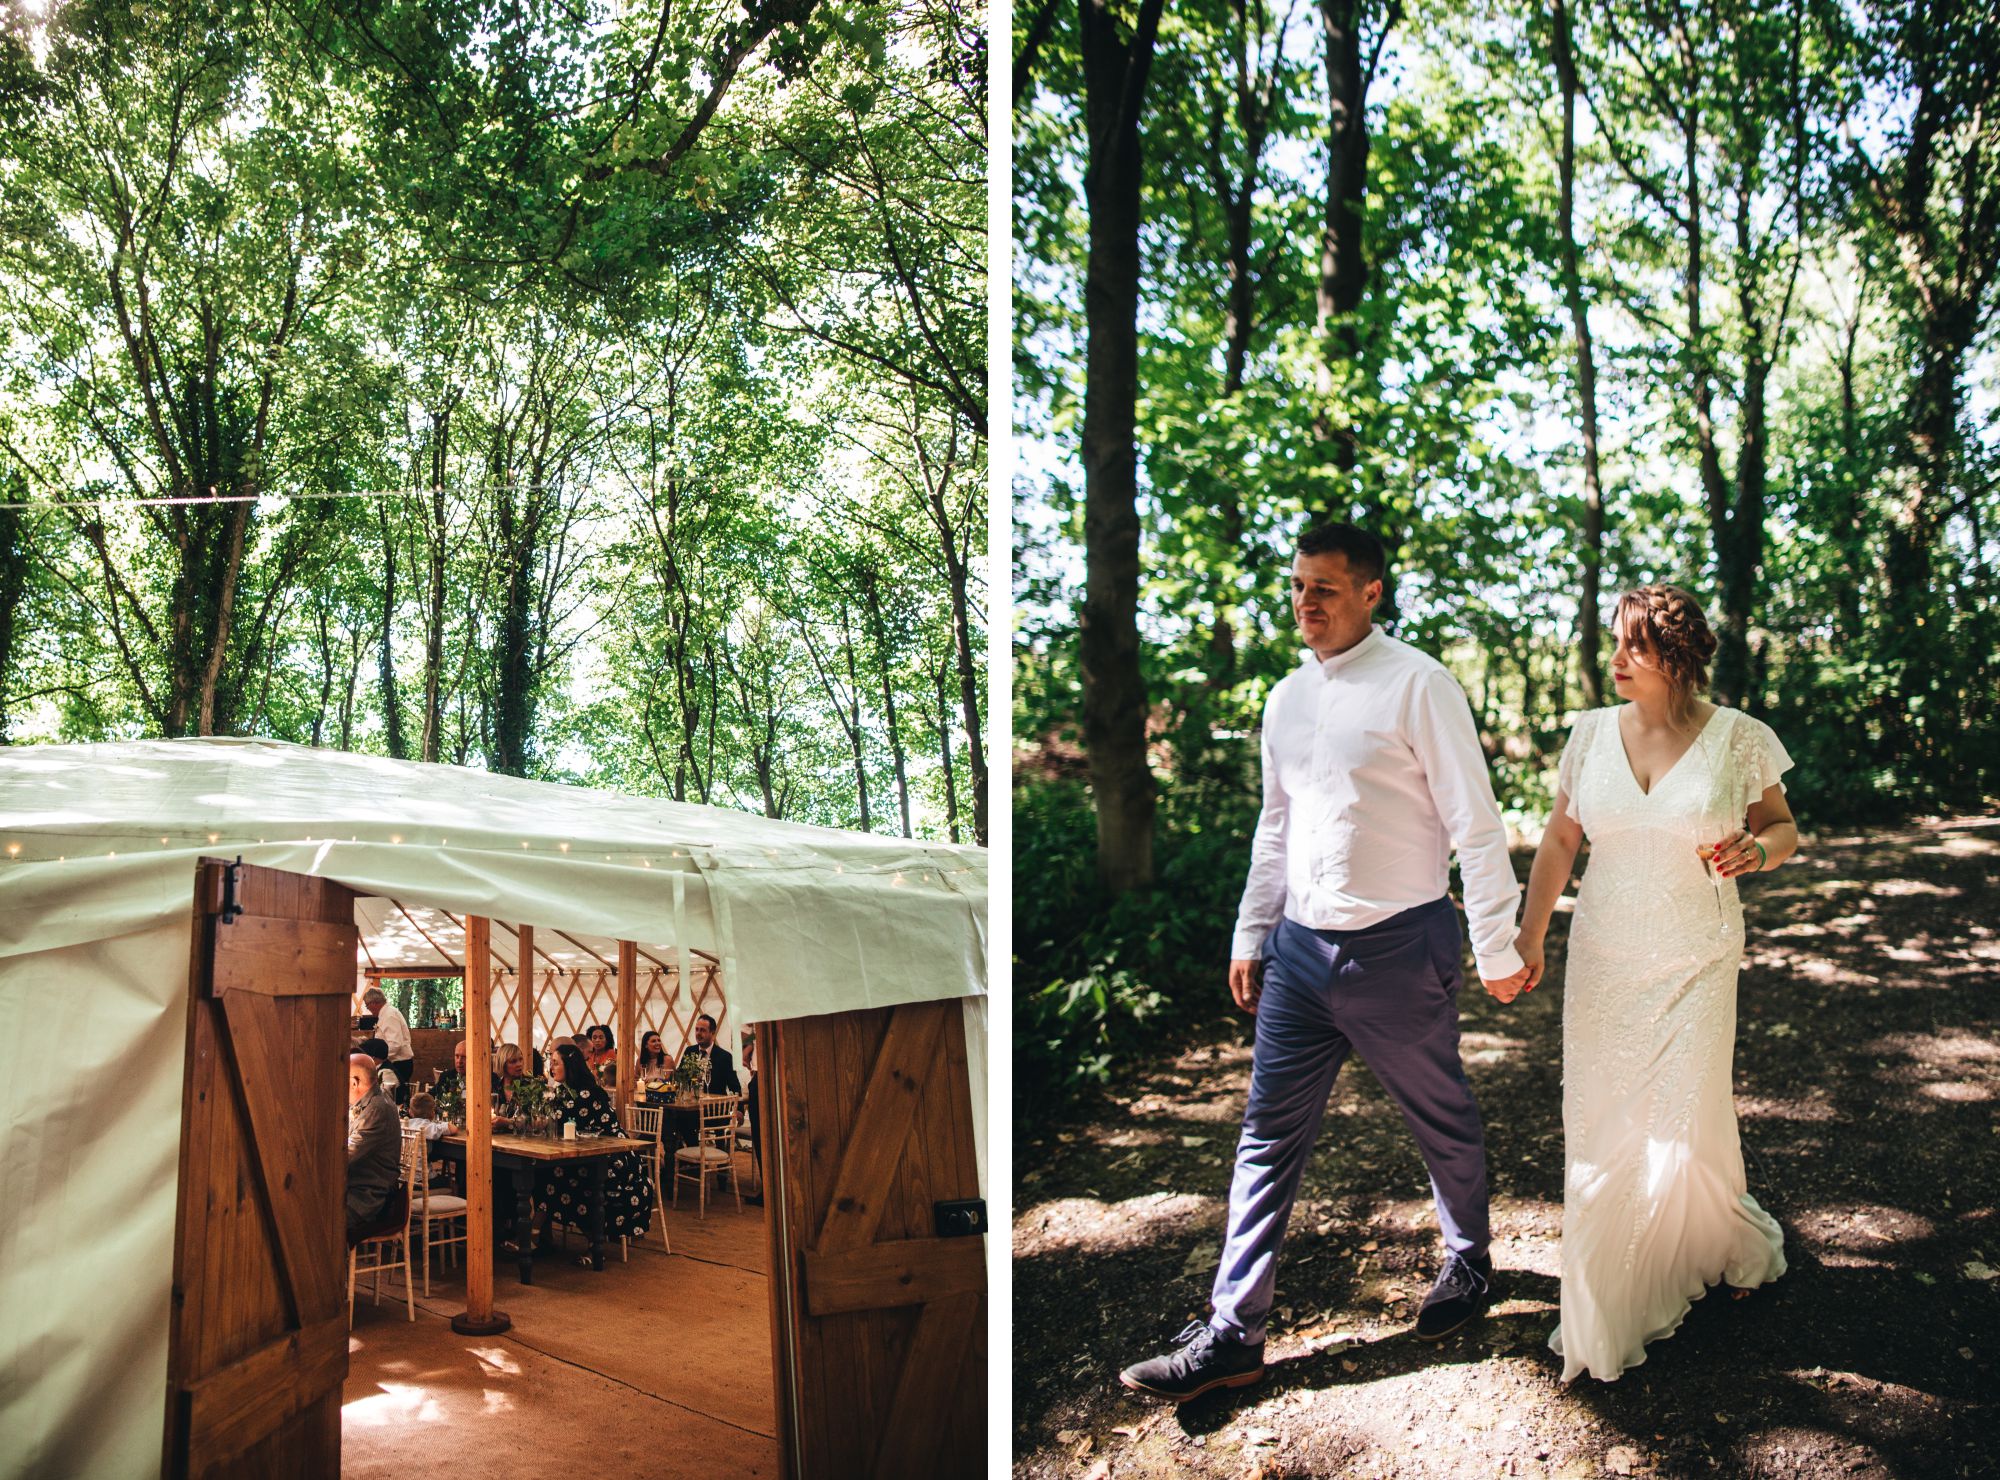 couple enter the yurt for the wedding breakfast